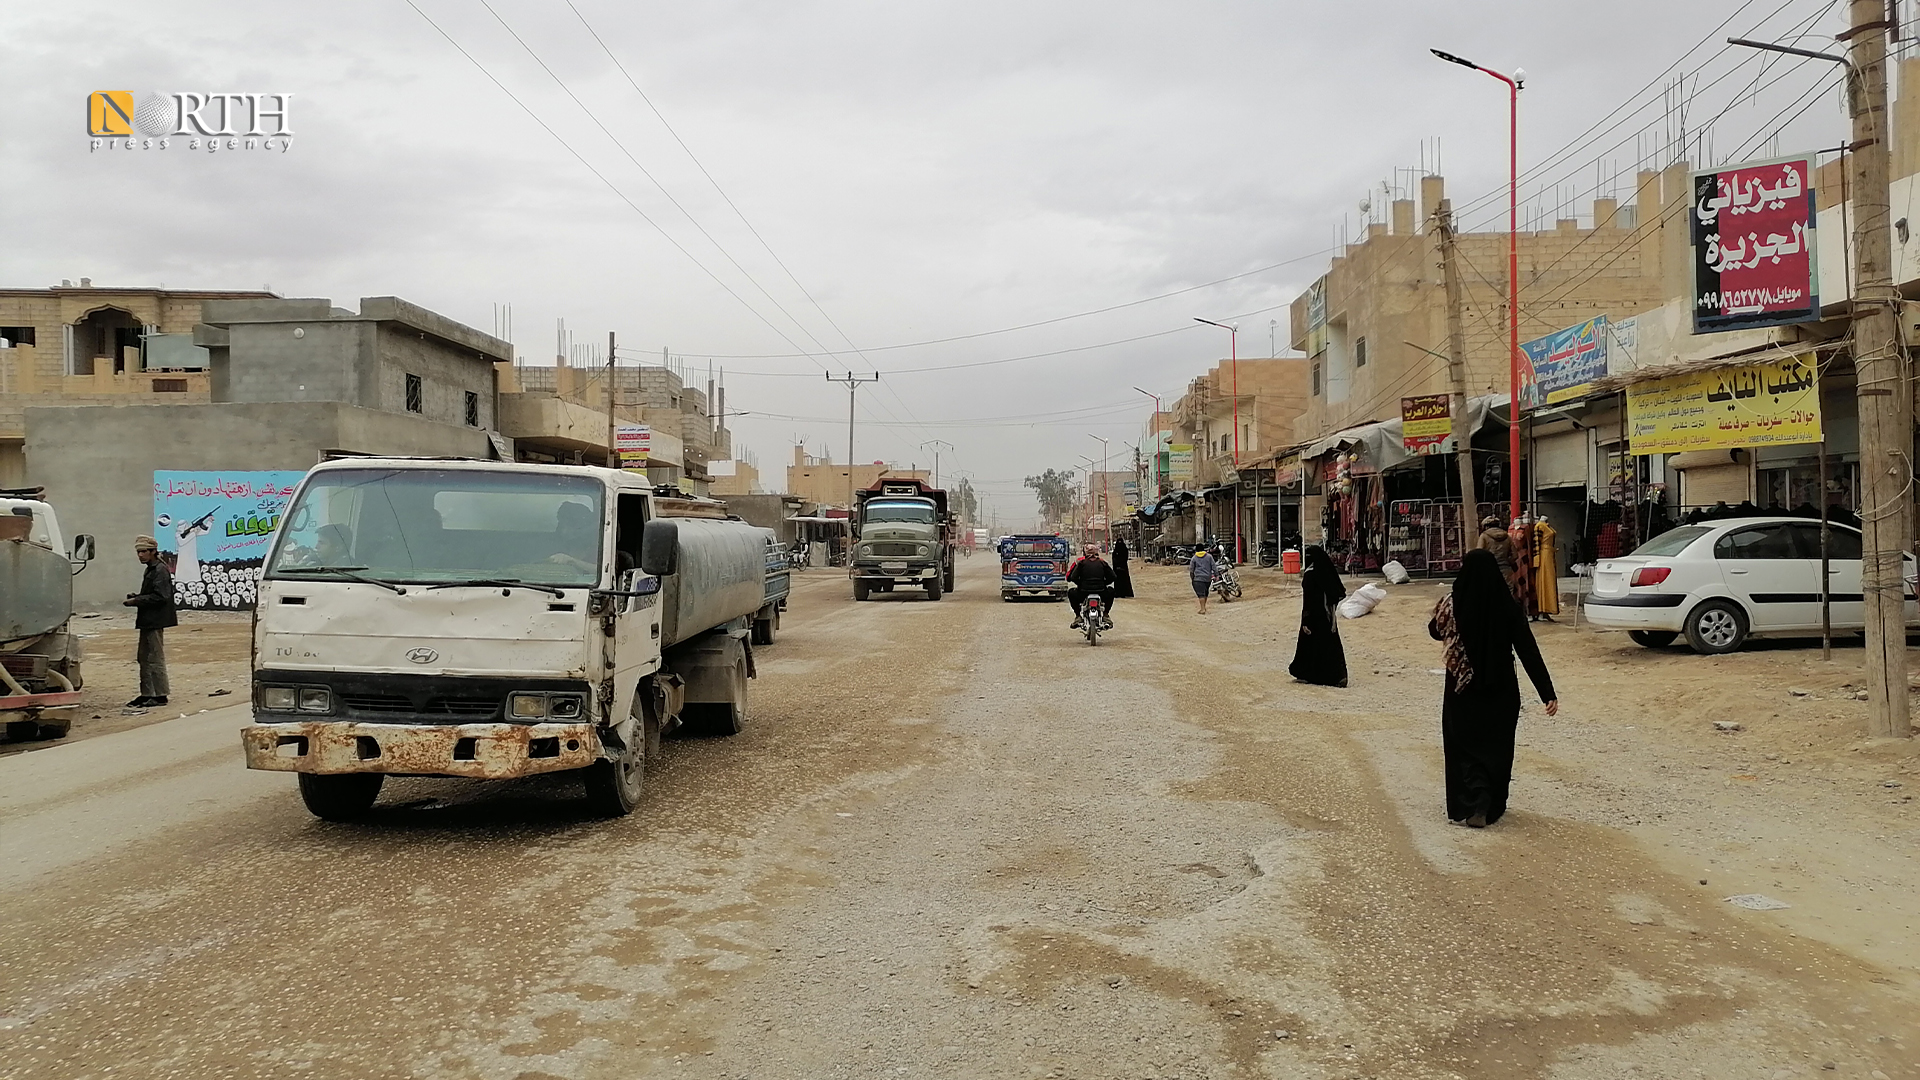 Main Street in the town of Abu Hamam, east of Deir ez-Zor – North Press